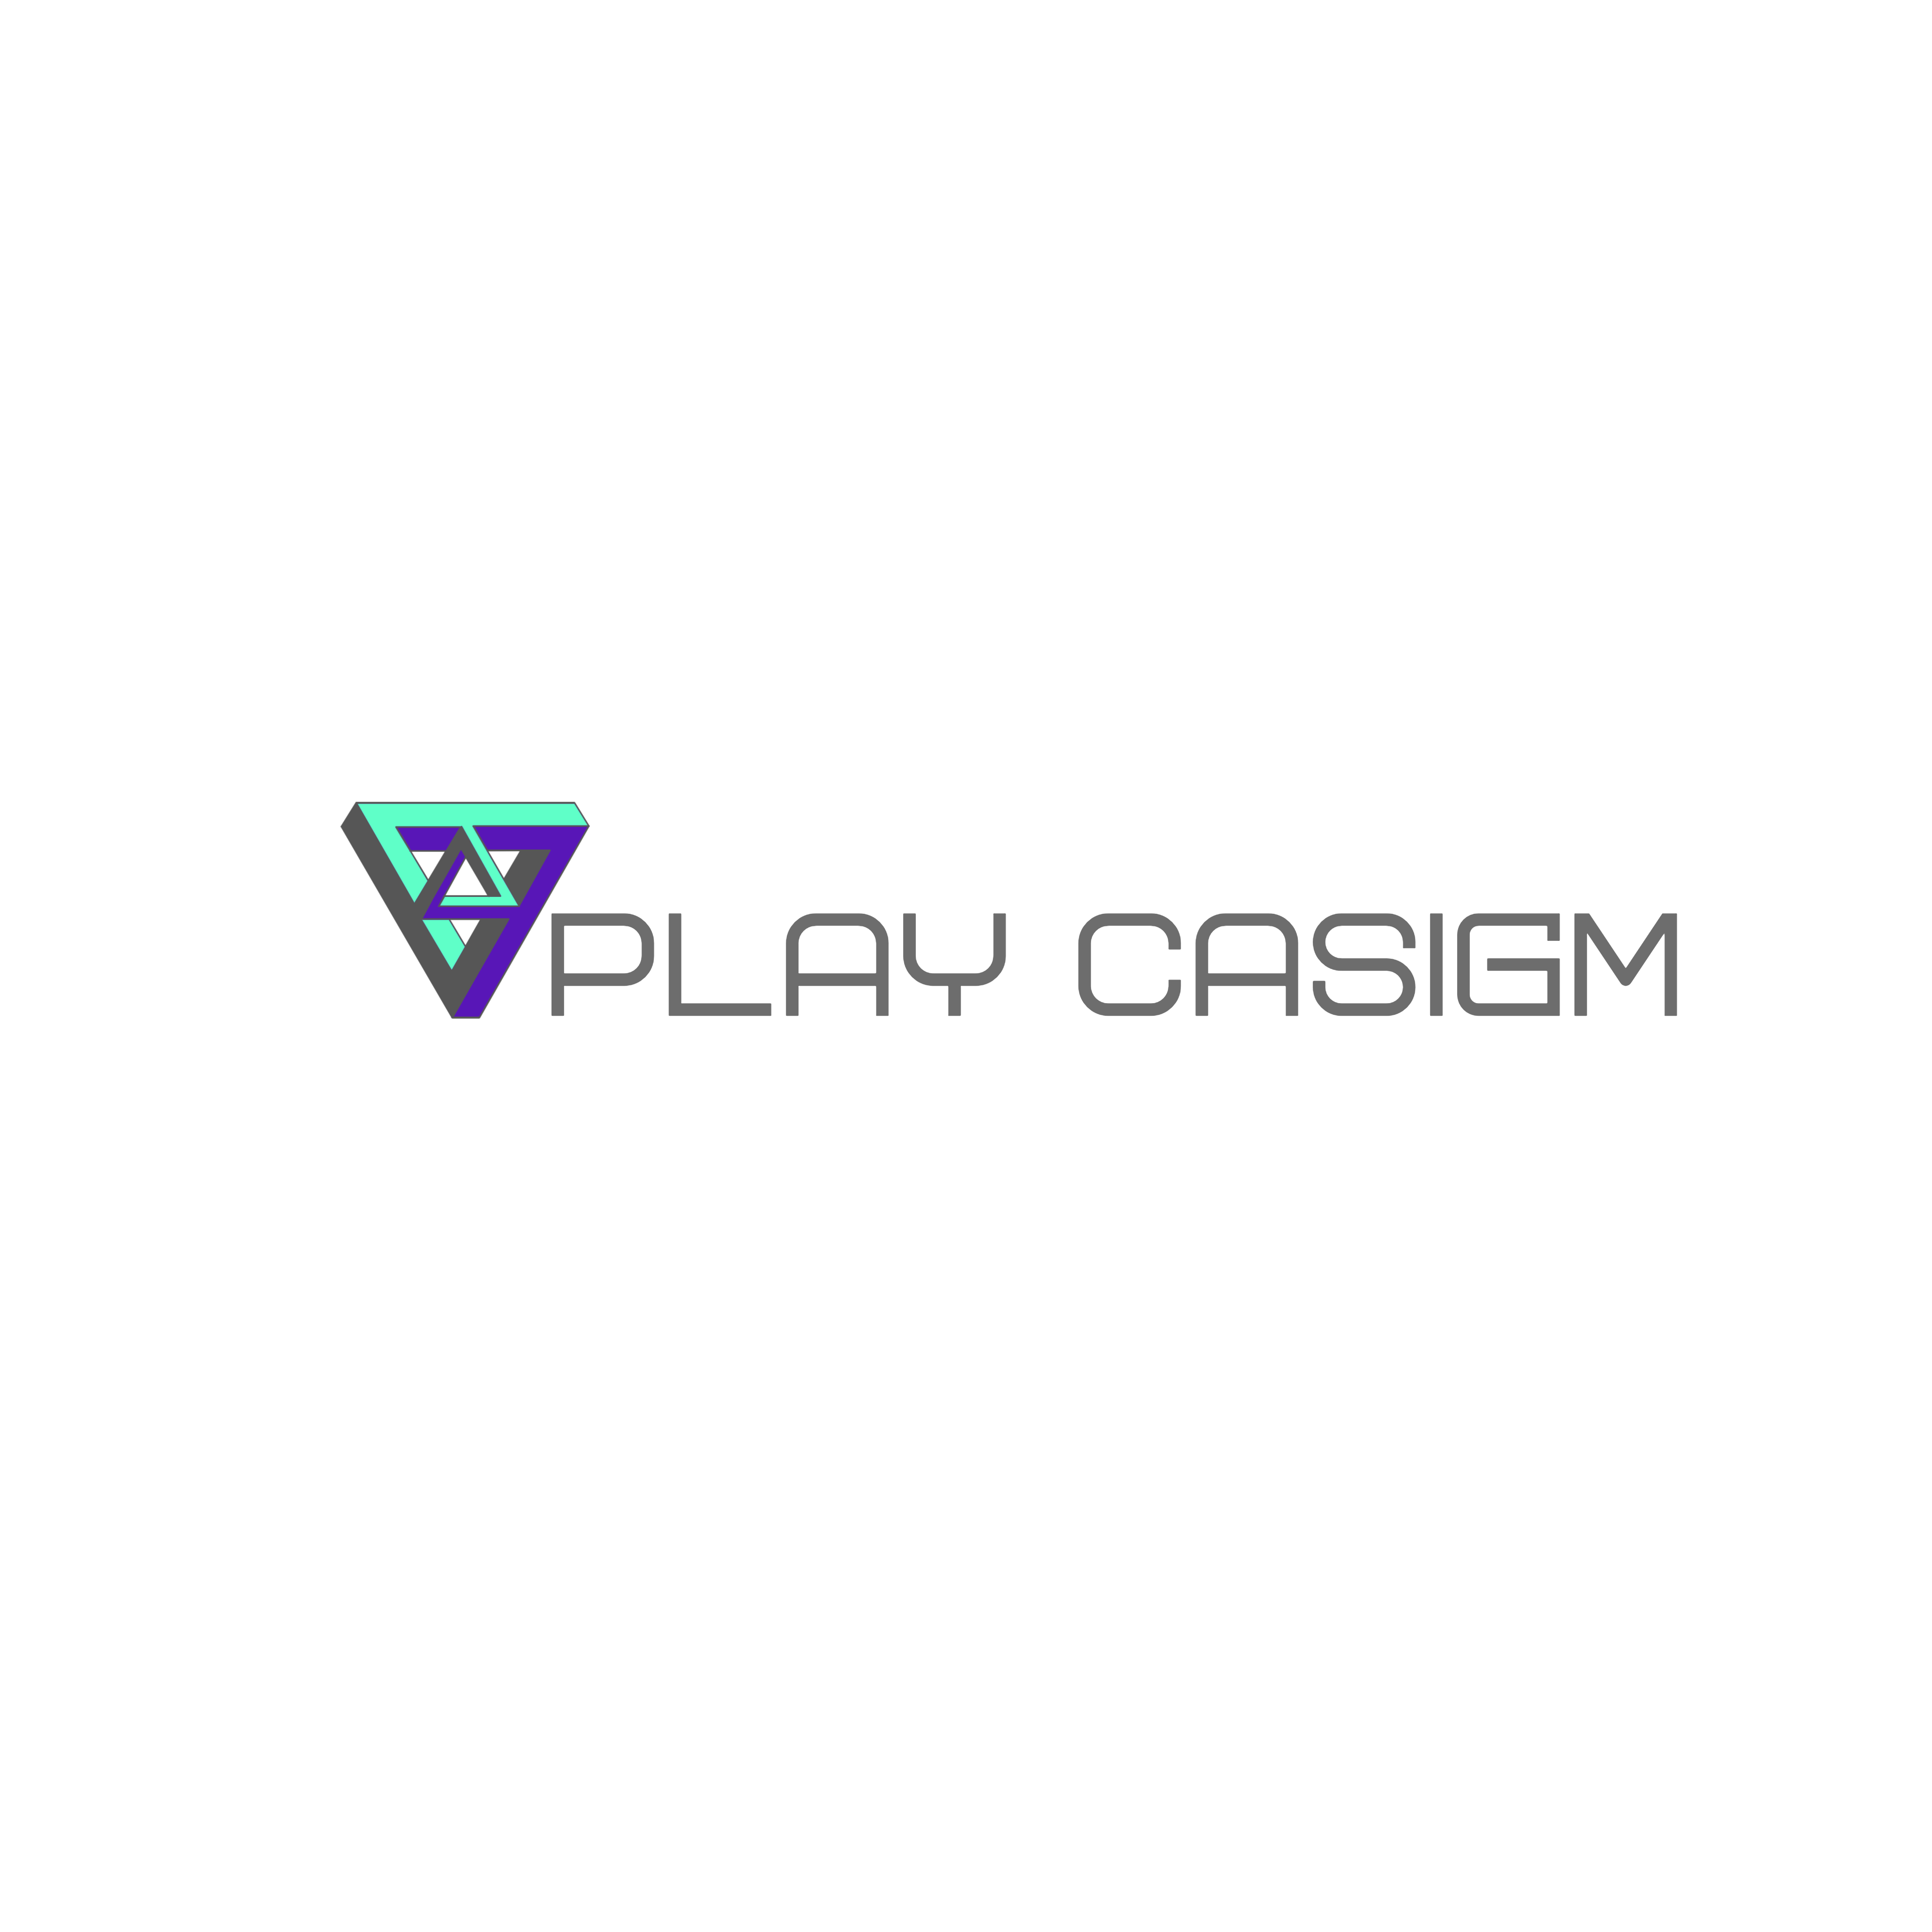 logo-play-casigm-1